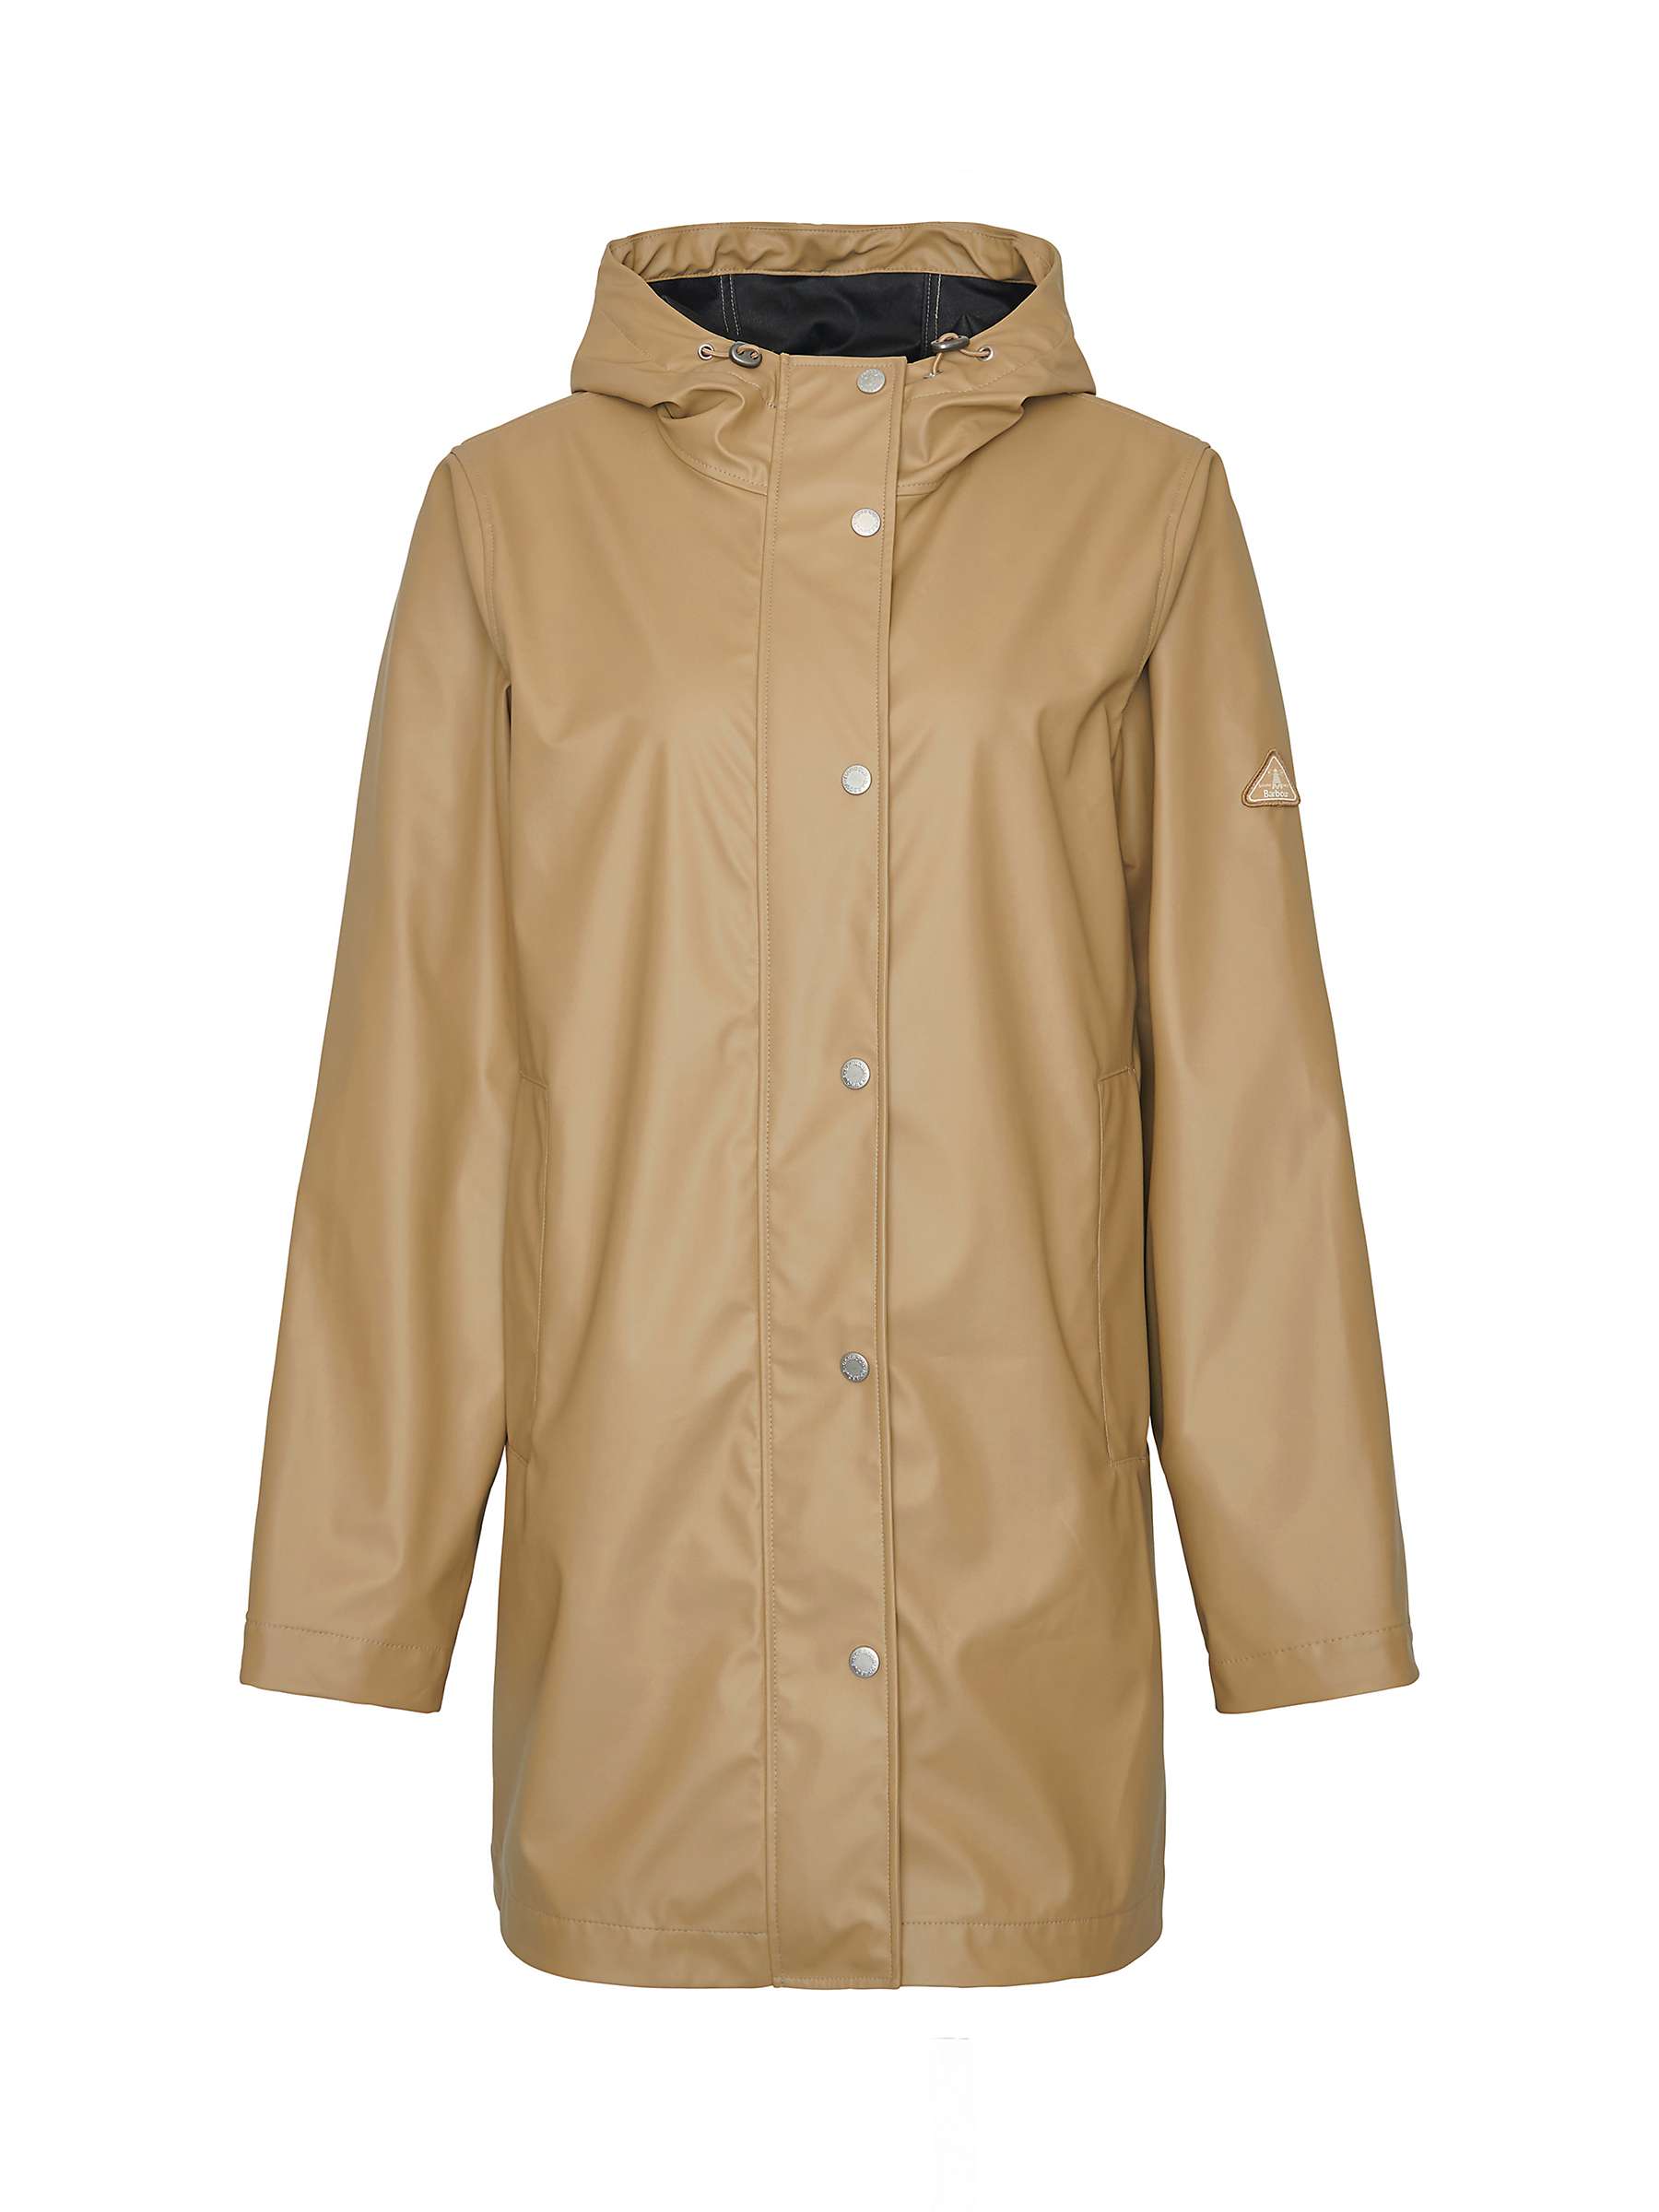 Buy Barbour Woodland Showerproof Jacket Online at johnlewis.com